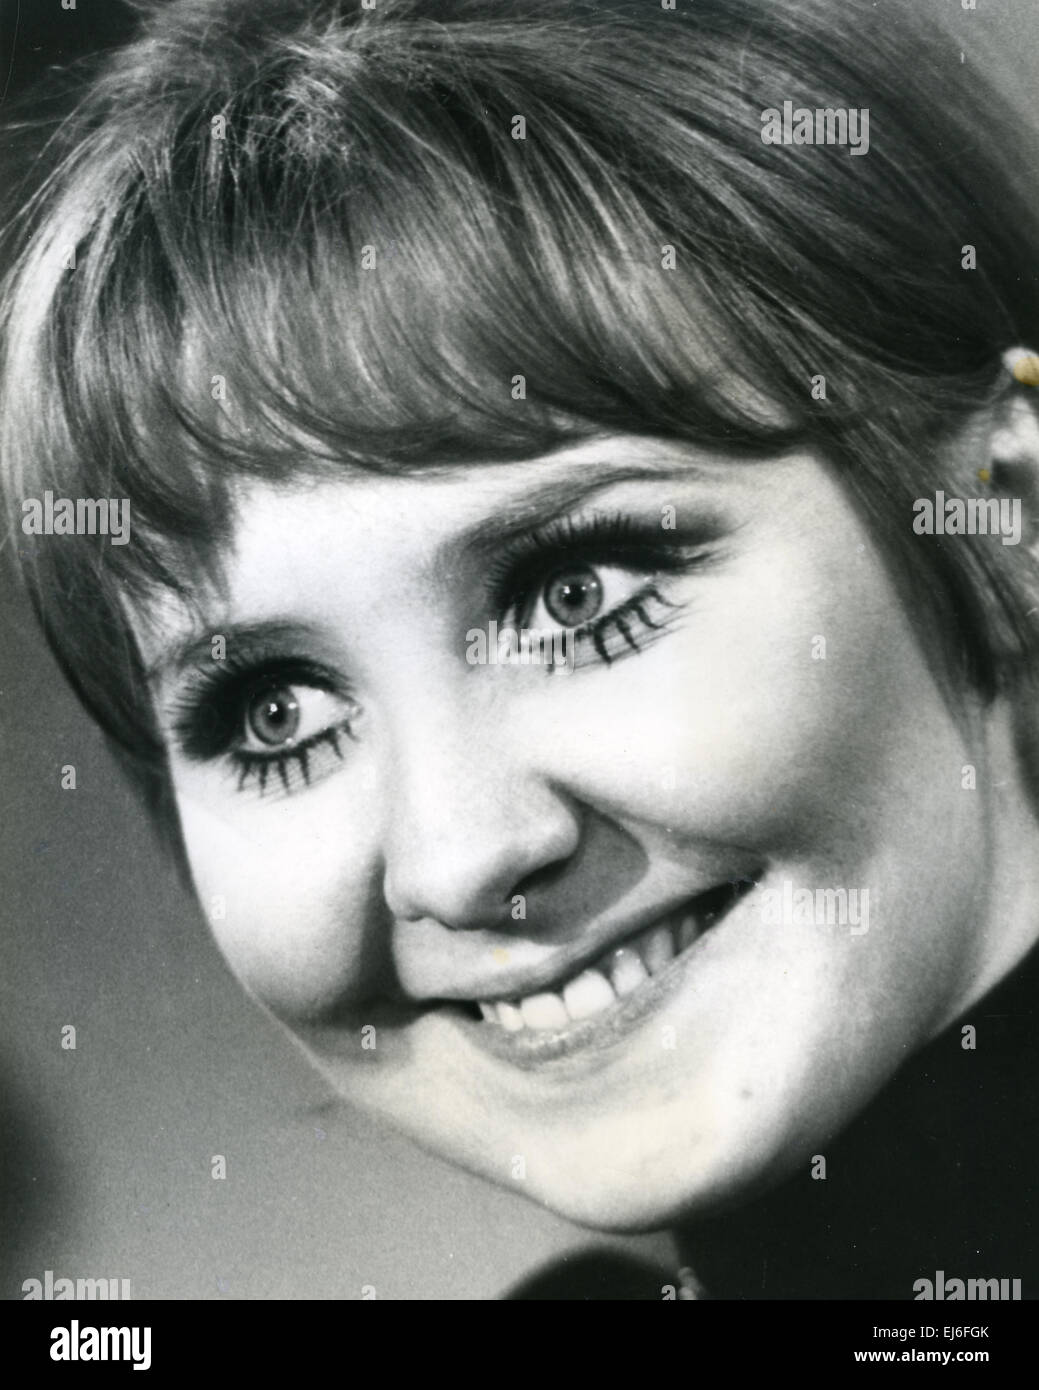 Lulu singer pop scottish hi-res stock photography and images - Alamy